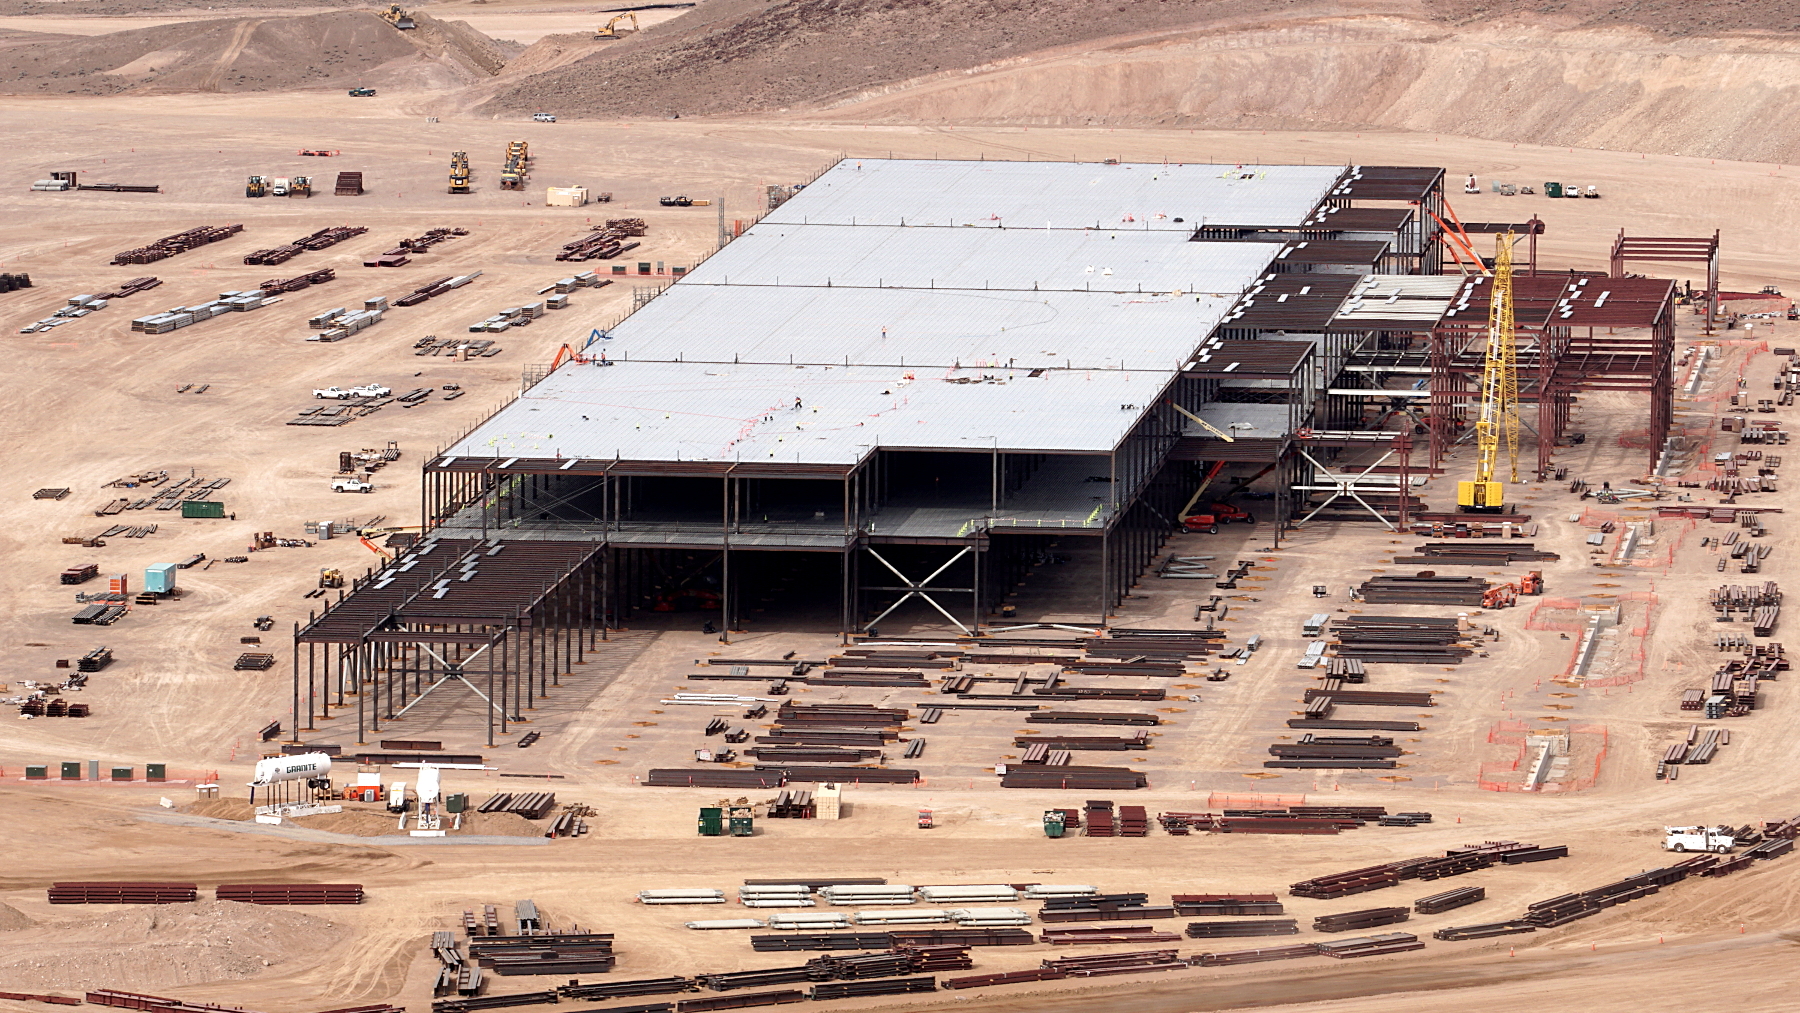 Tesla battery gigafactory site, Reno, Nevada, Feb 25, 2015  [photo: CC BY-NC-SA 4.0 Bob Tregilus]